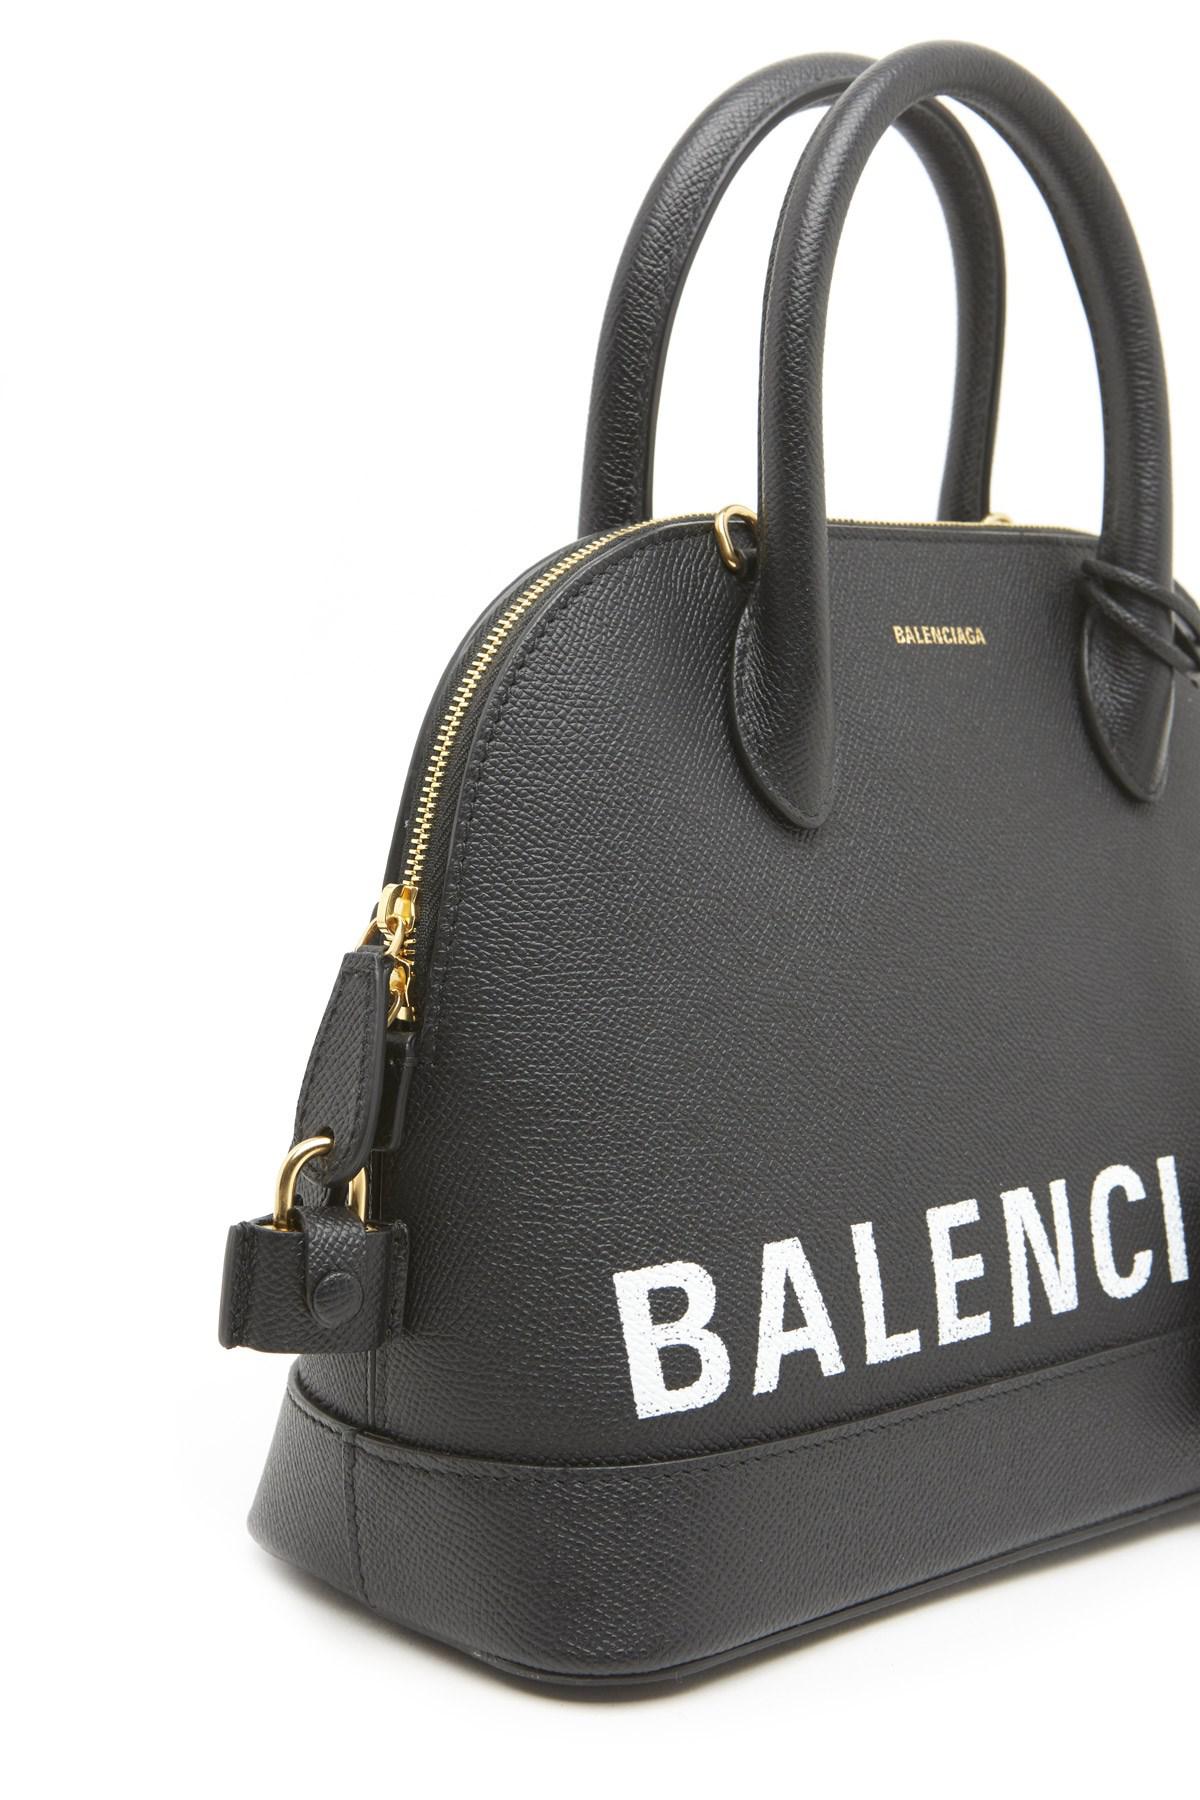 Balenciaga Leather 'ville' Hand Bag in Black - Lyst